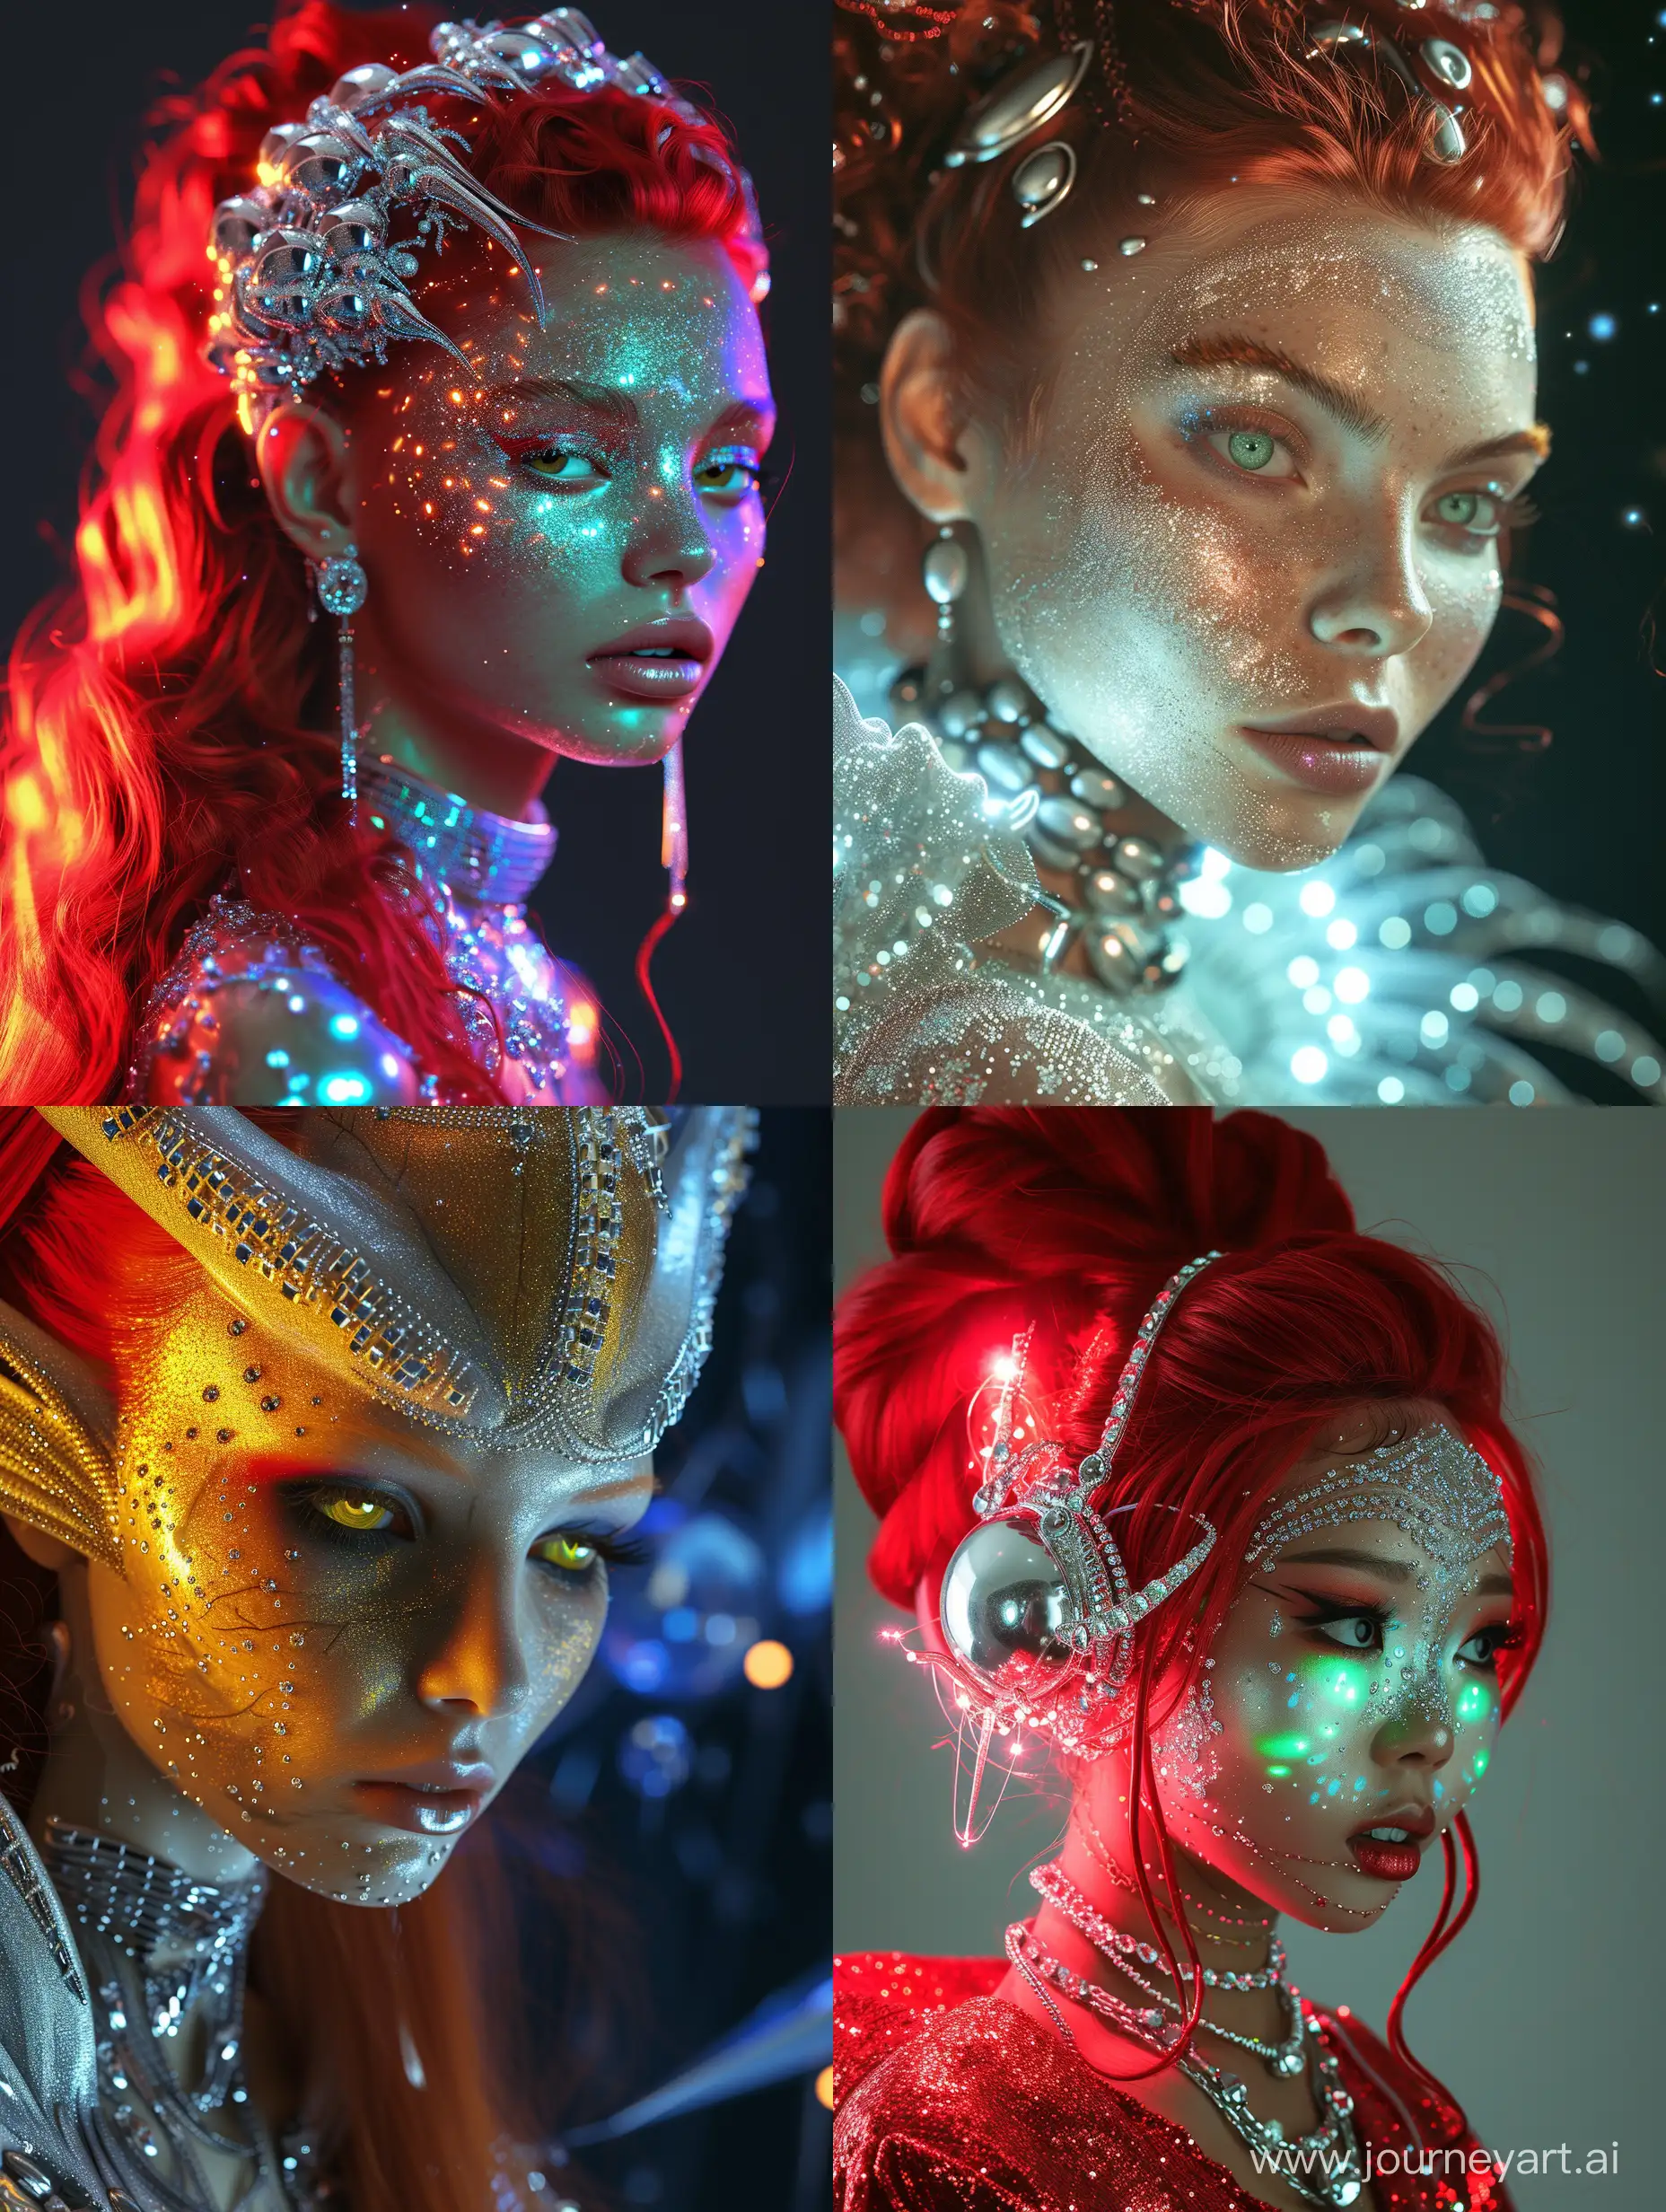 Alien-Girl-with-Red-Hair-Wearing-Big-Silver-Jewels-in-Glowing-Skin-Portrait